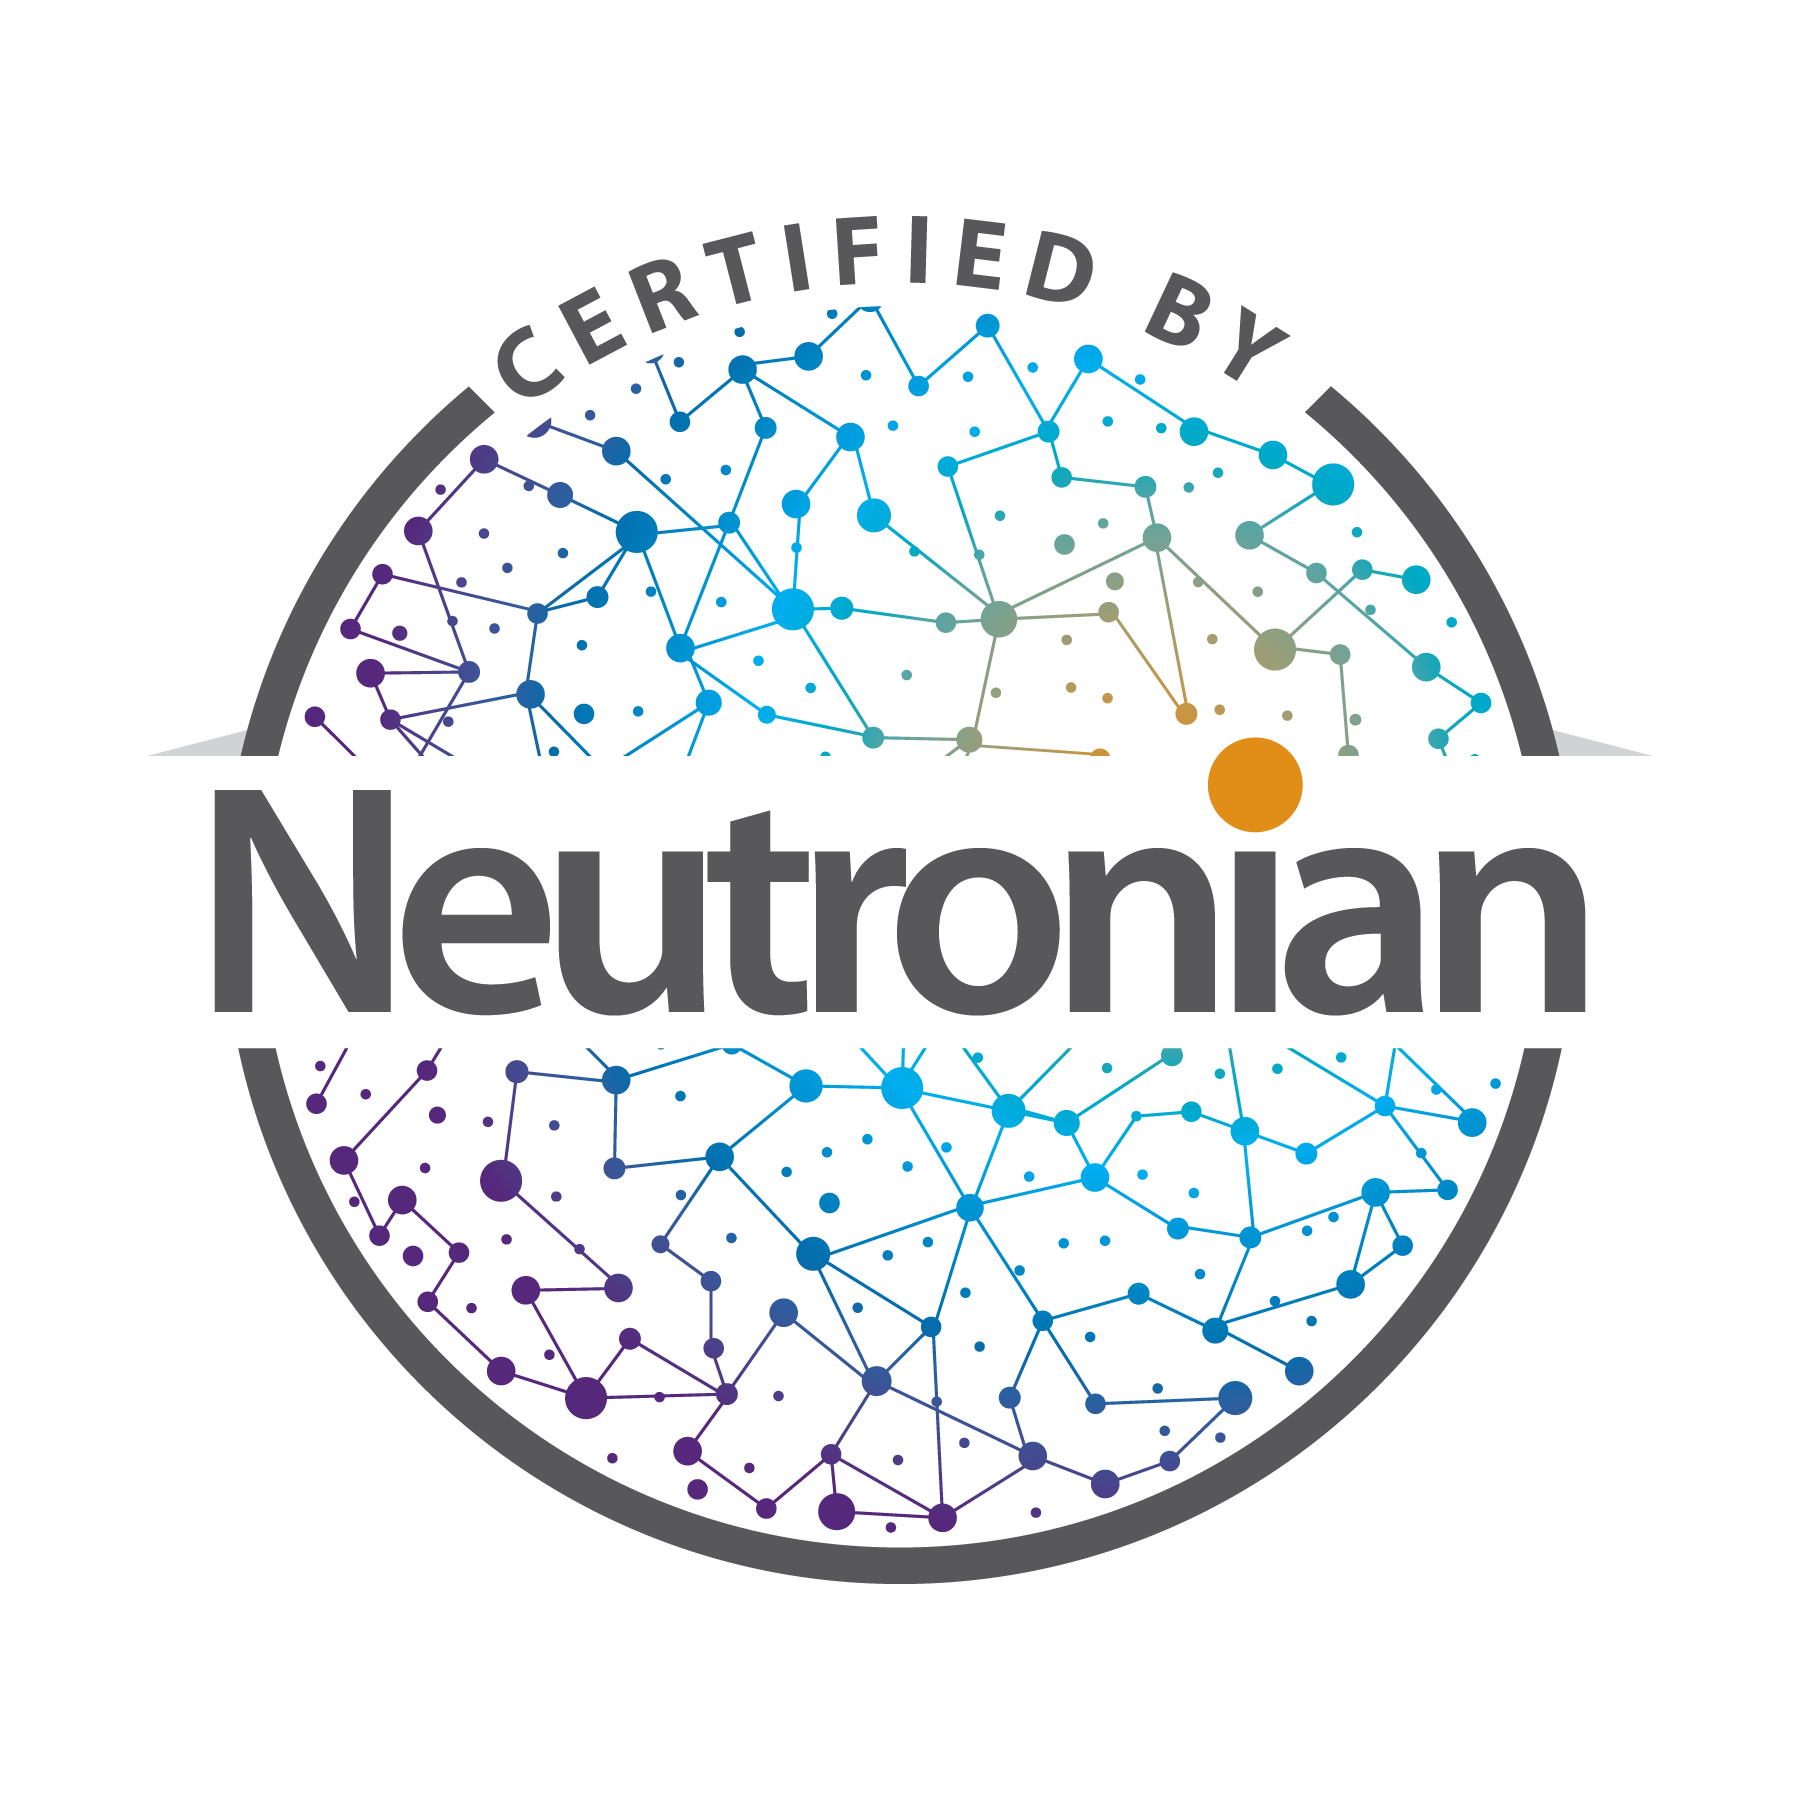 Neutronian-Certification-badge_LIGHT-BACKGROUND